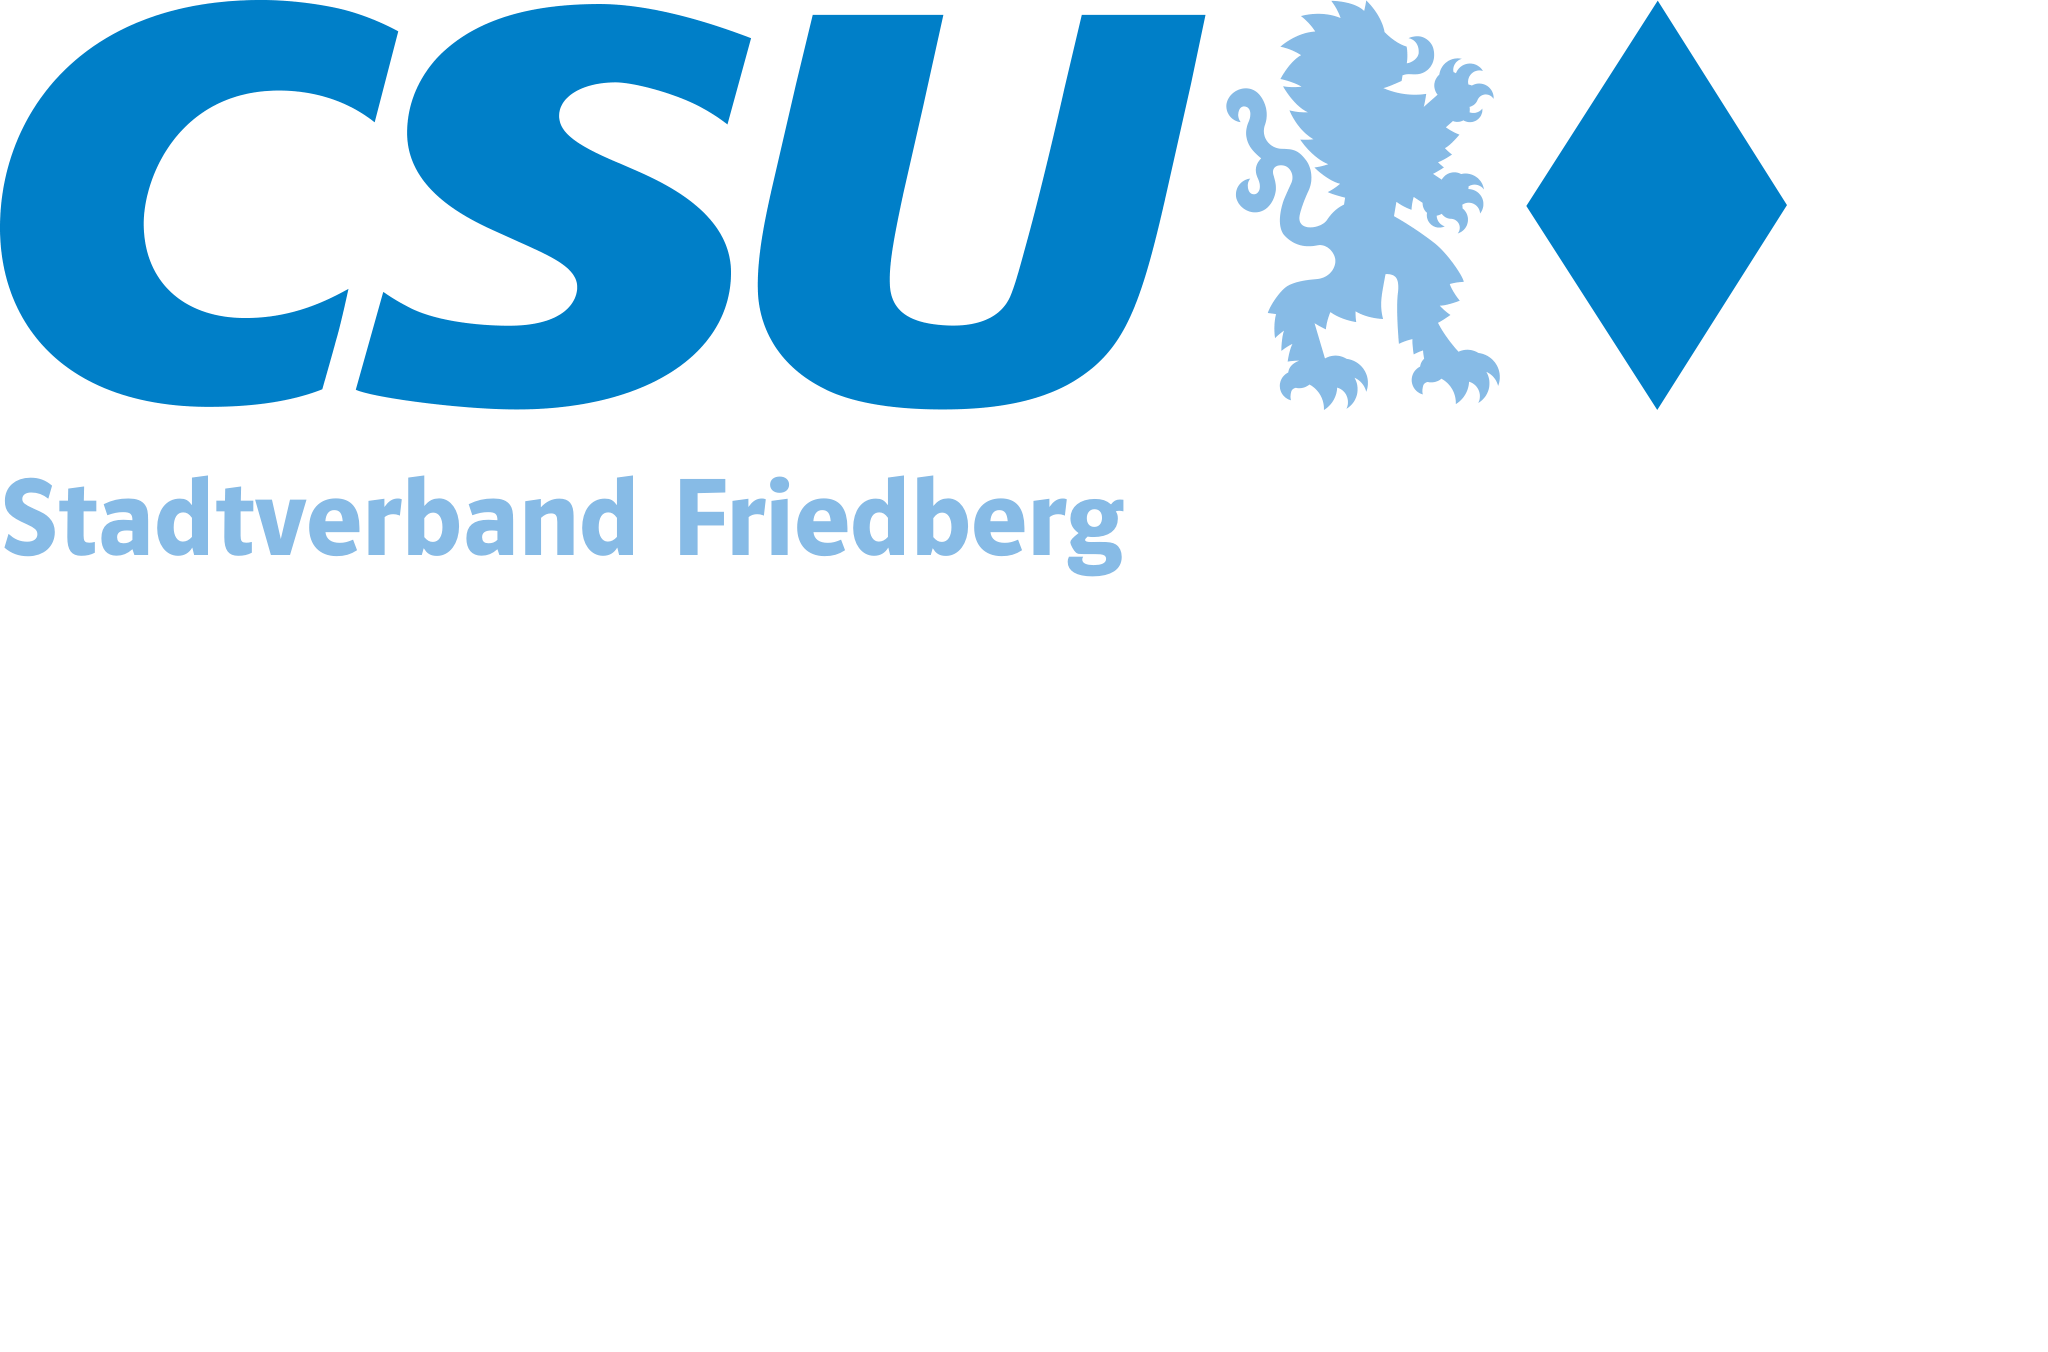 CSU Stadtverband Friedberg